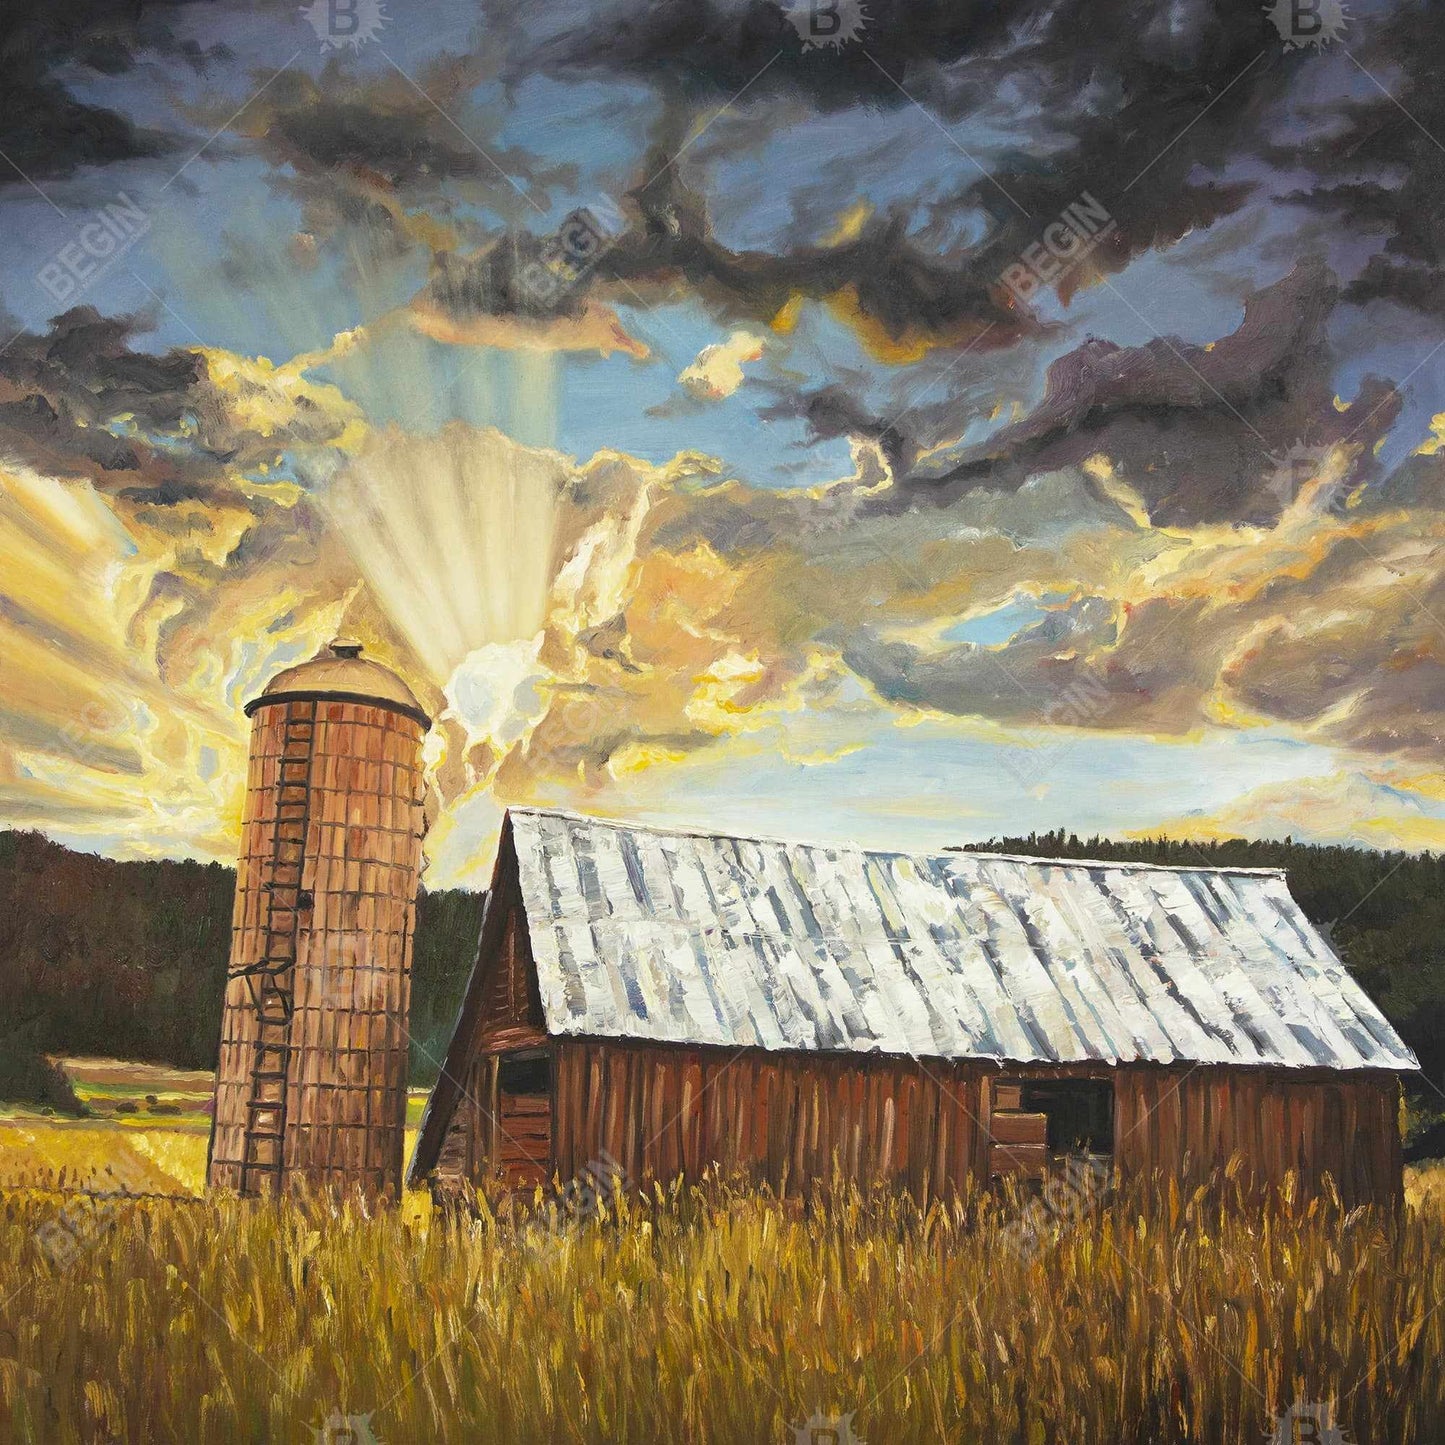 Hay barn - 32x32 Print on canvas